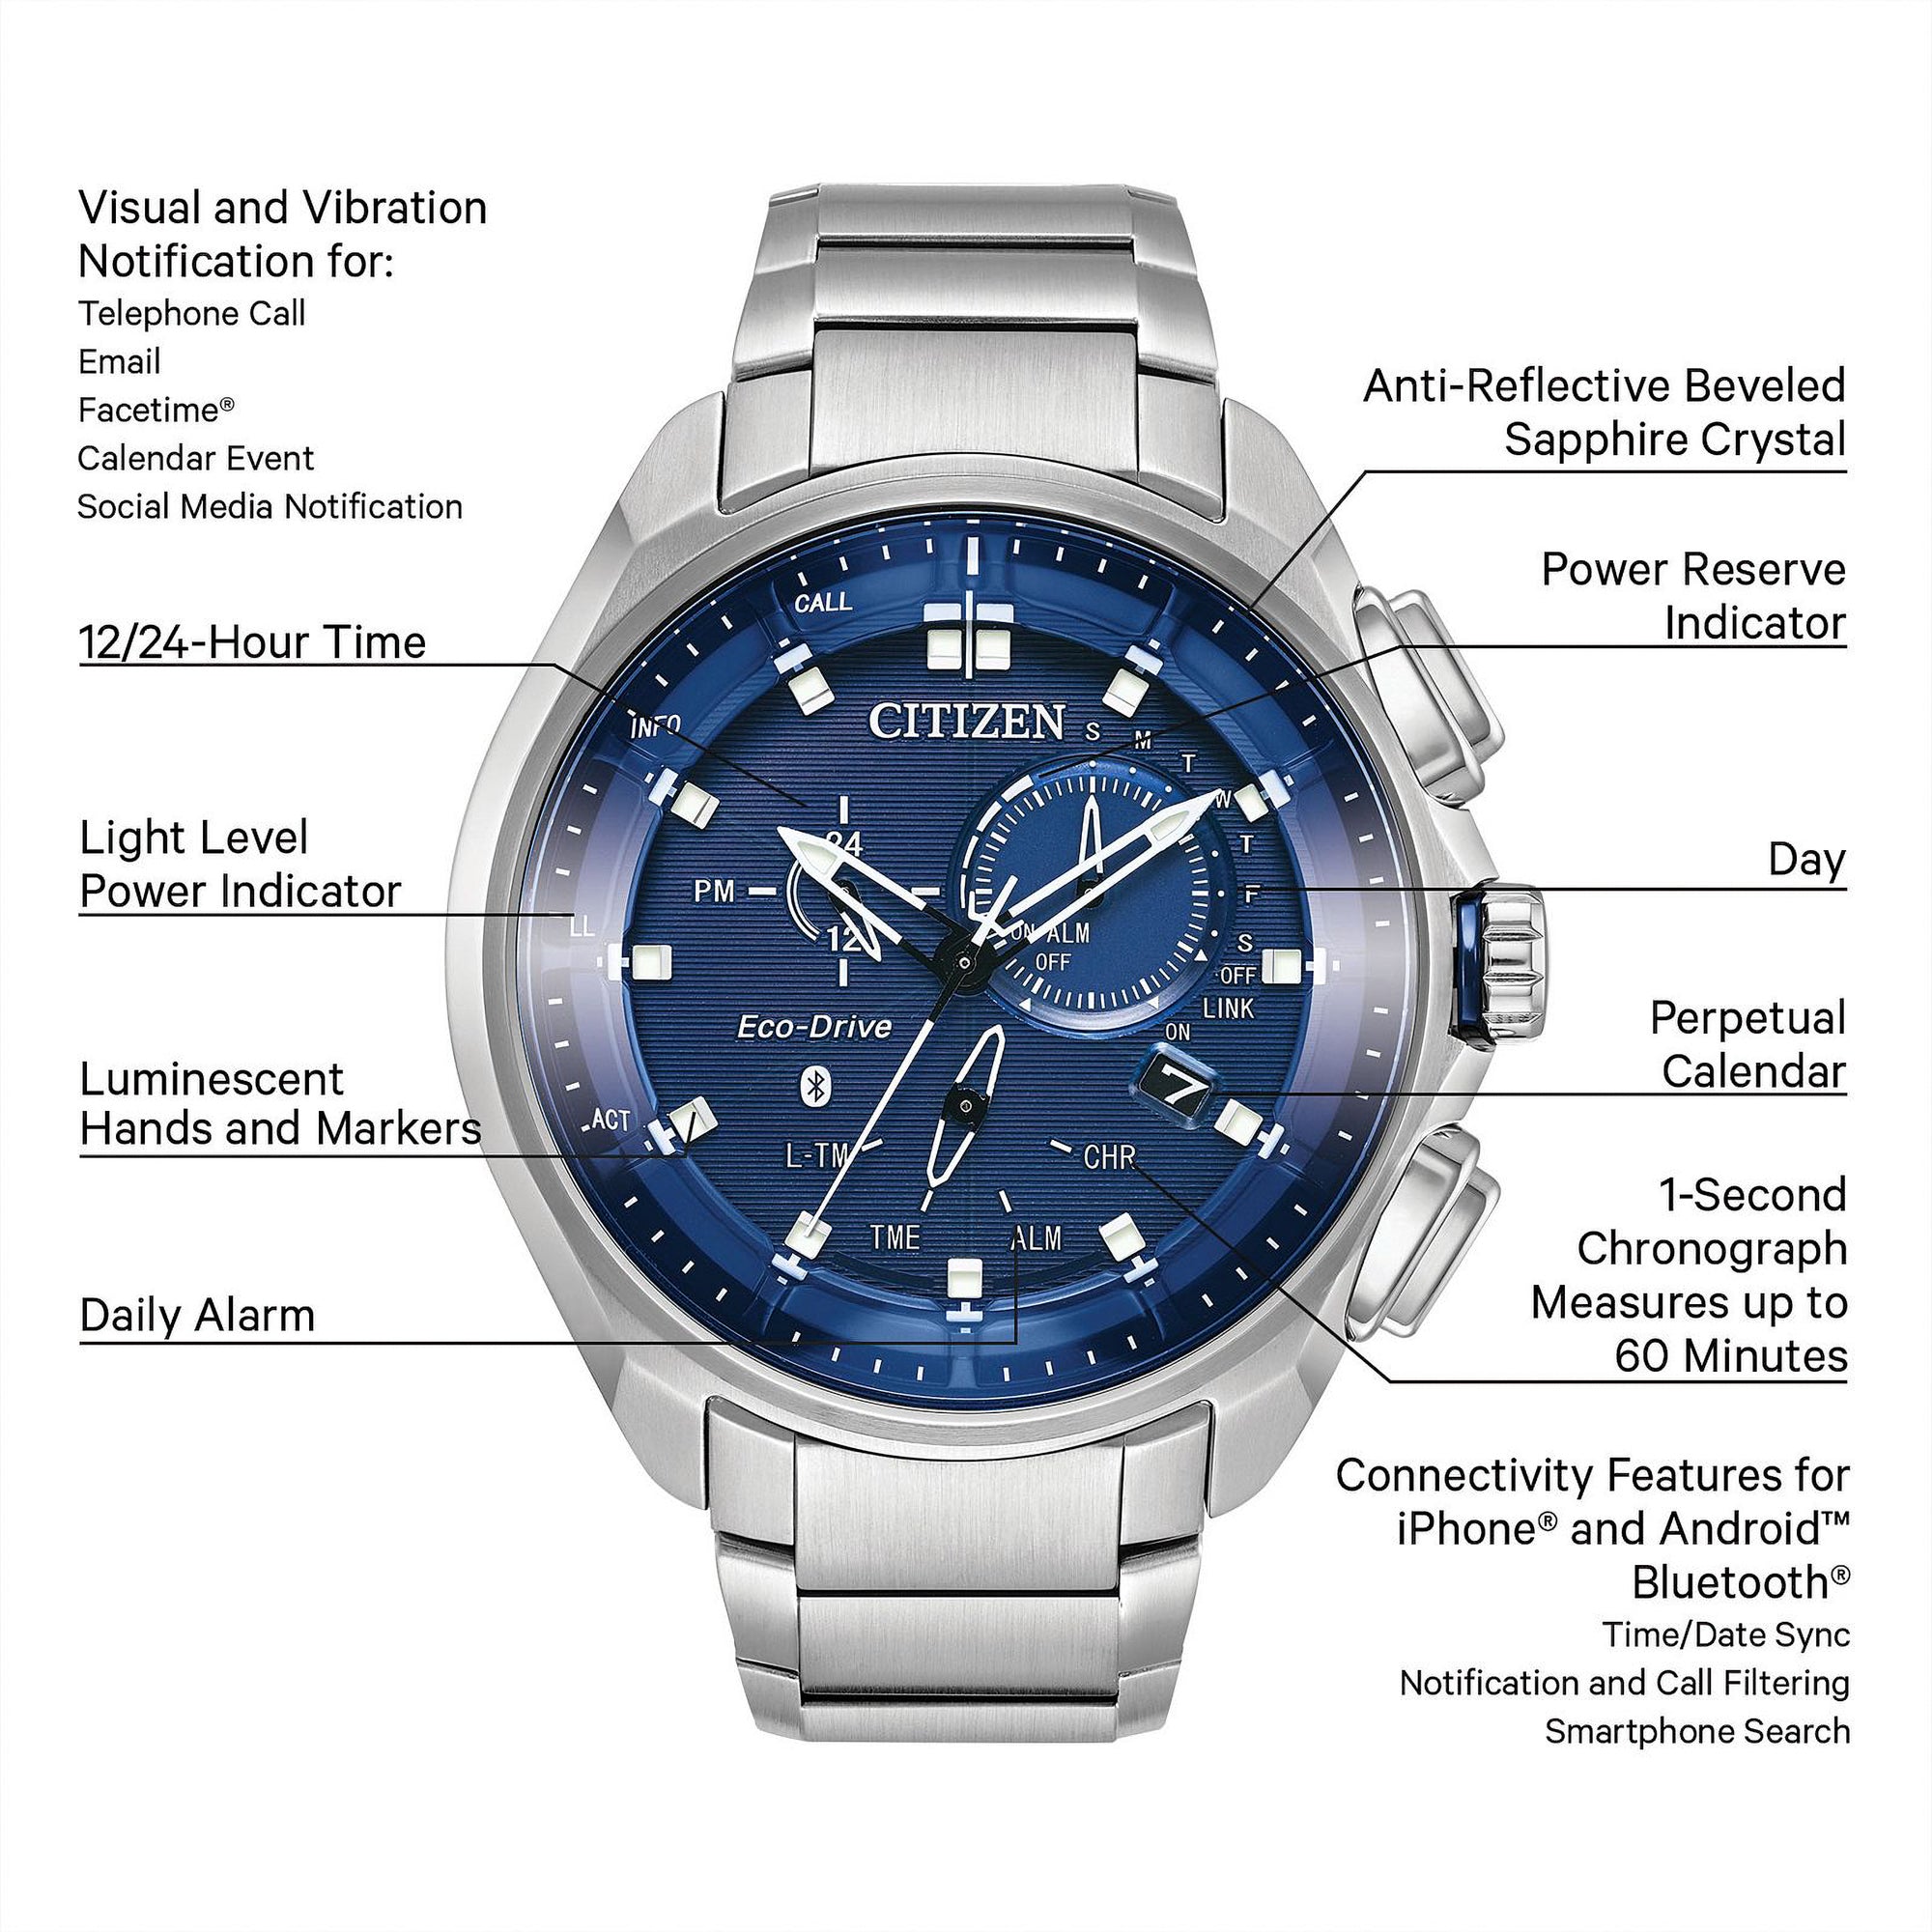 Citizen Eco-Drive Proximity Pryzm Dual Time Men's Watch BZ1021-54L